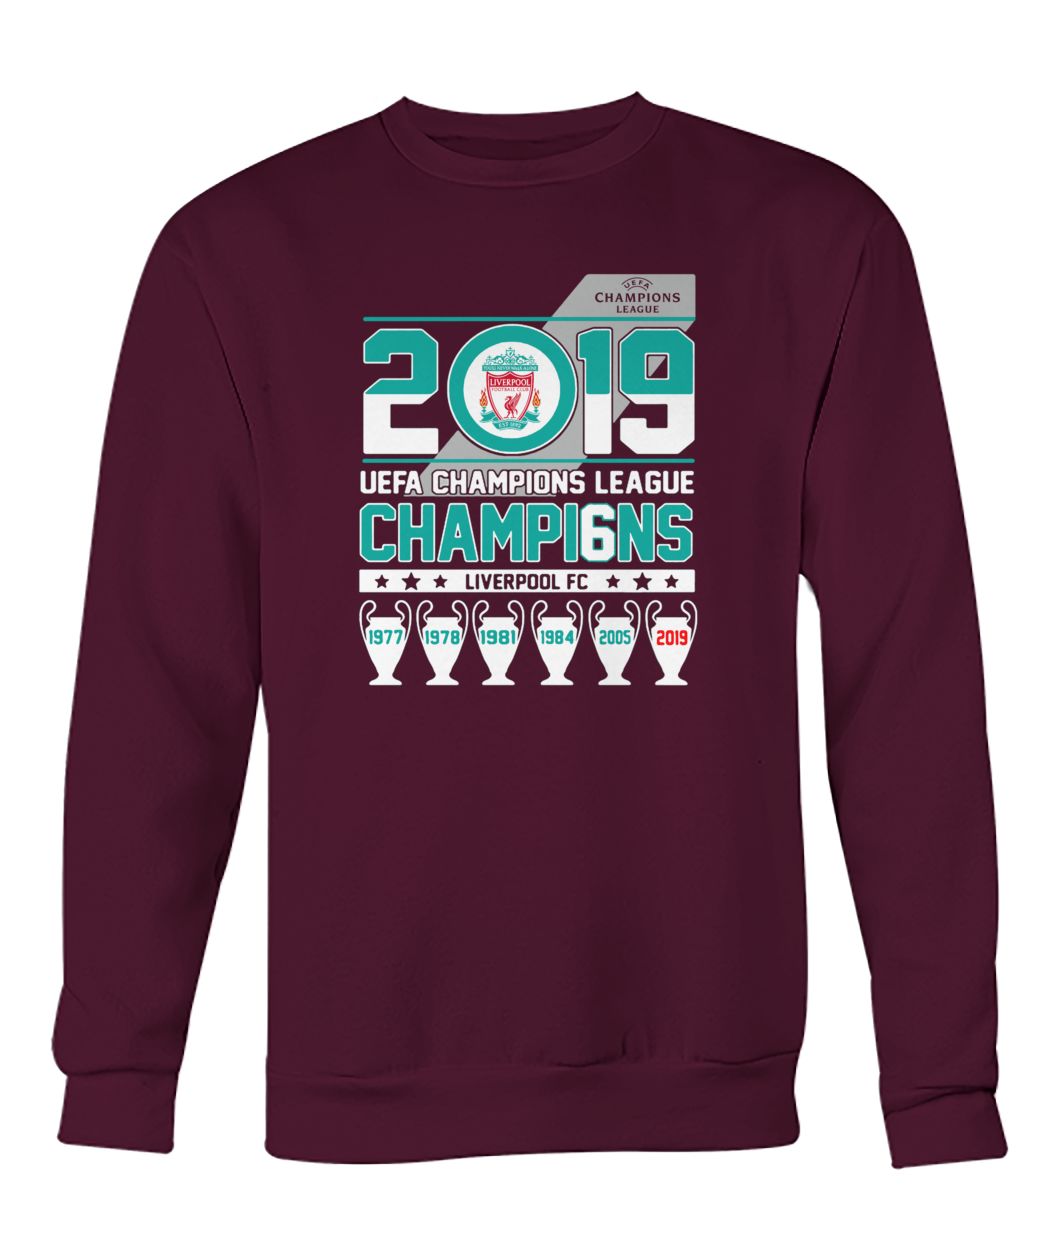 UEFA champions league 2019 champions liverpool fc crew neck sweatshirt